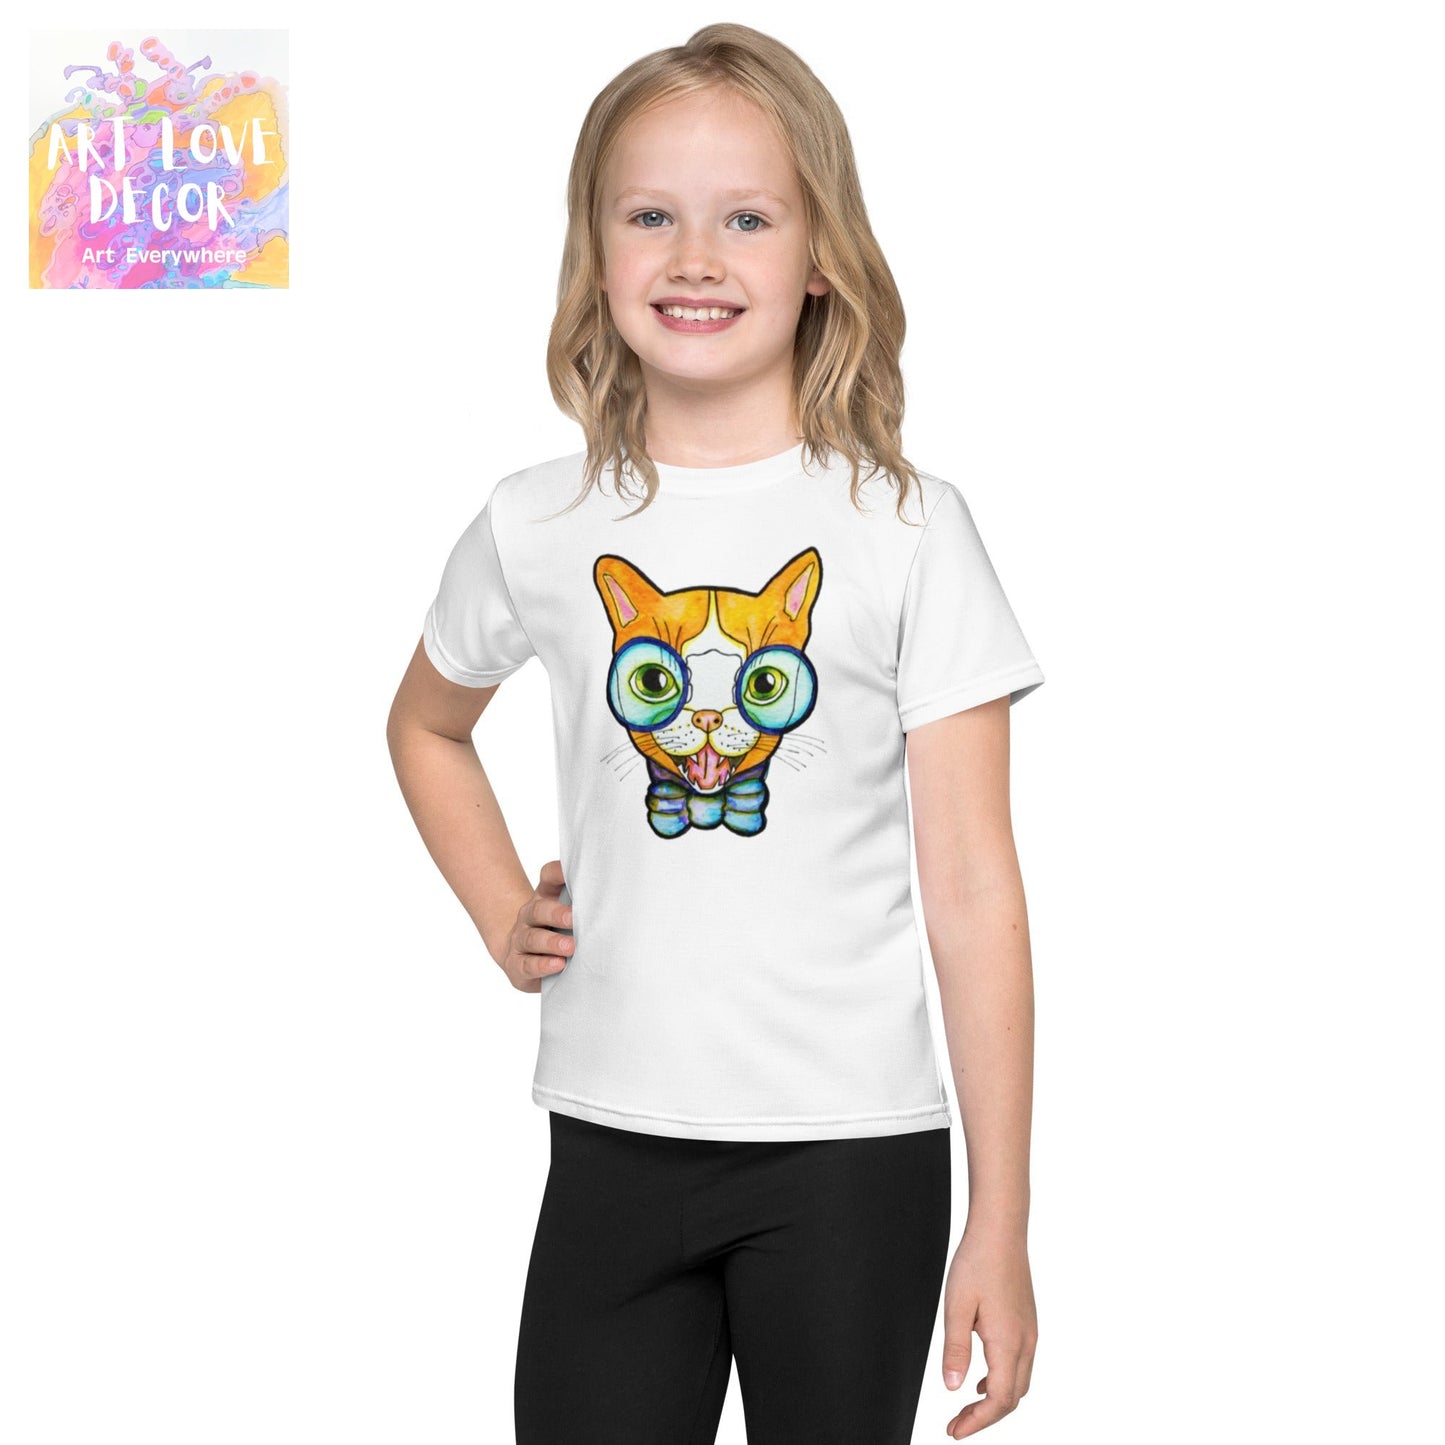 Smile Kitty Kids crew neck t-shirt